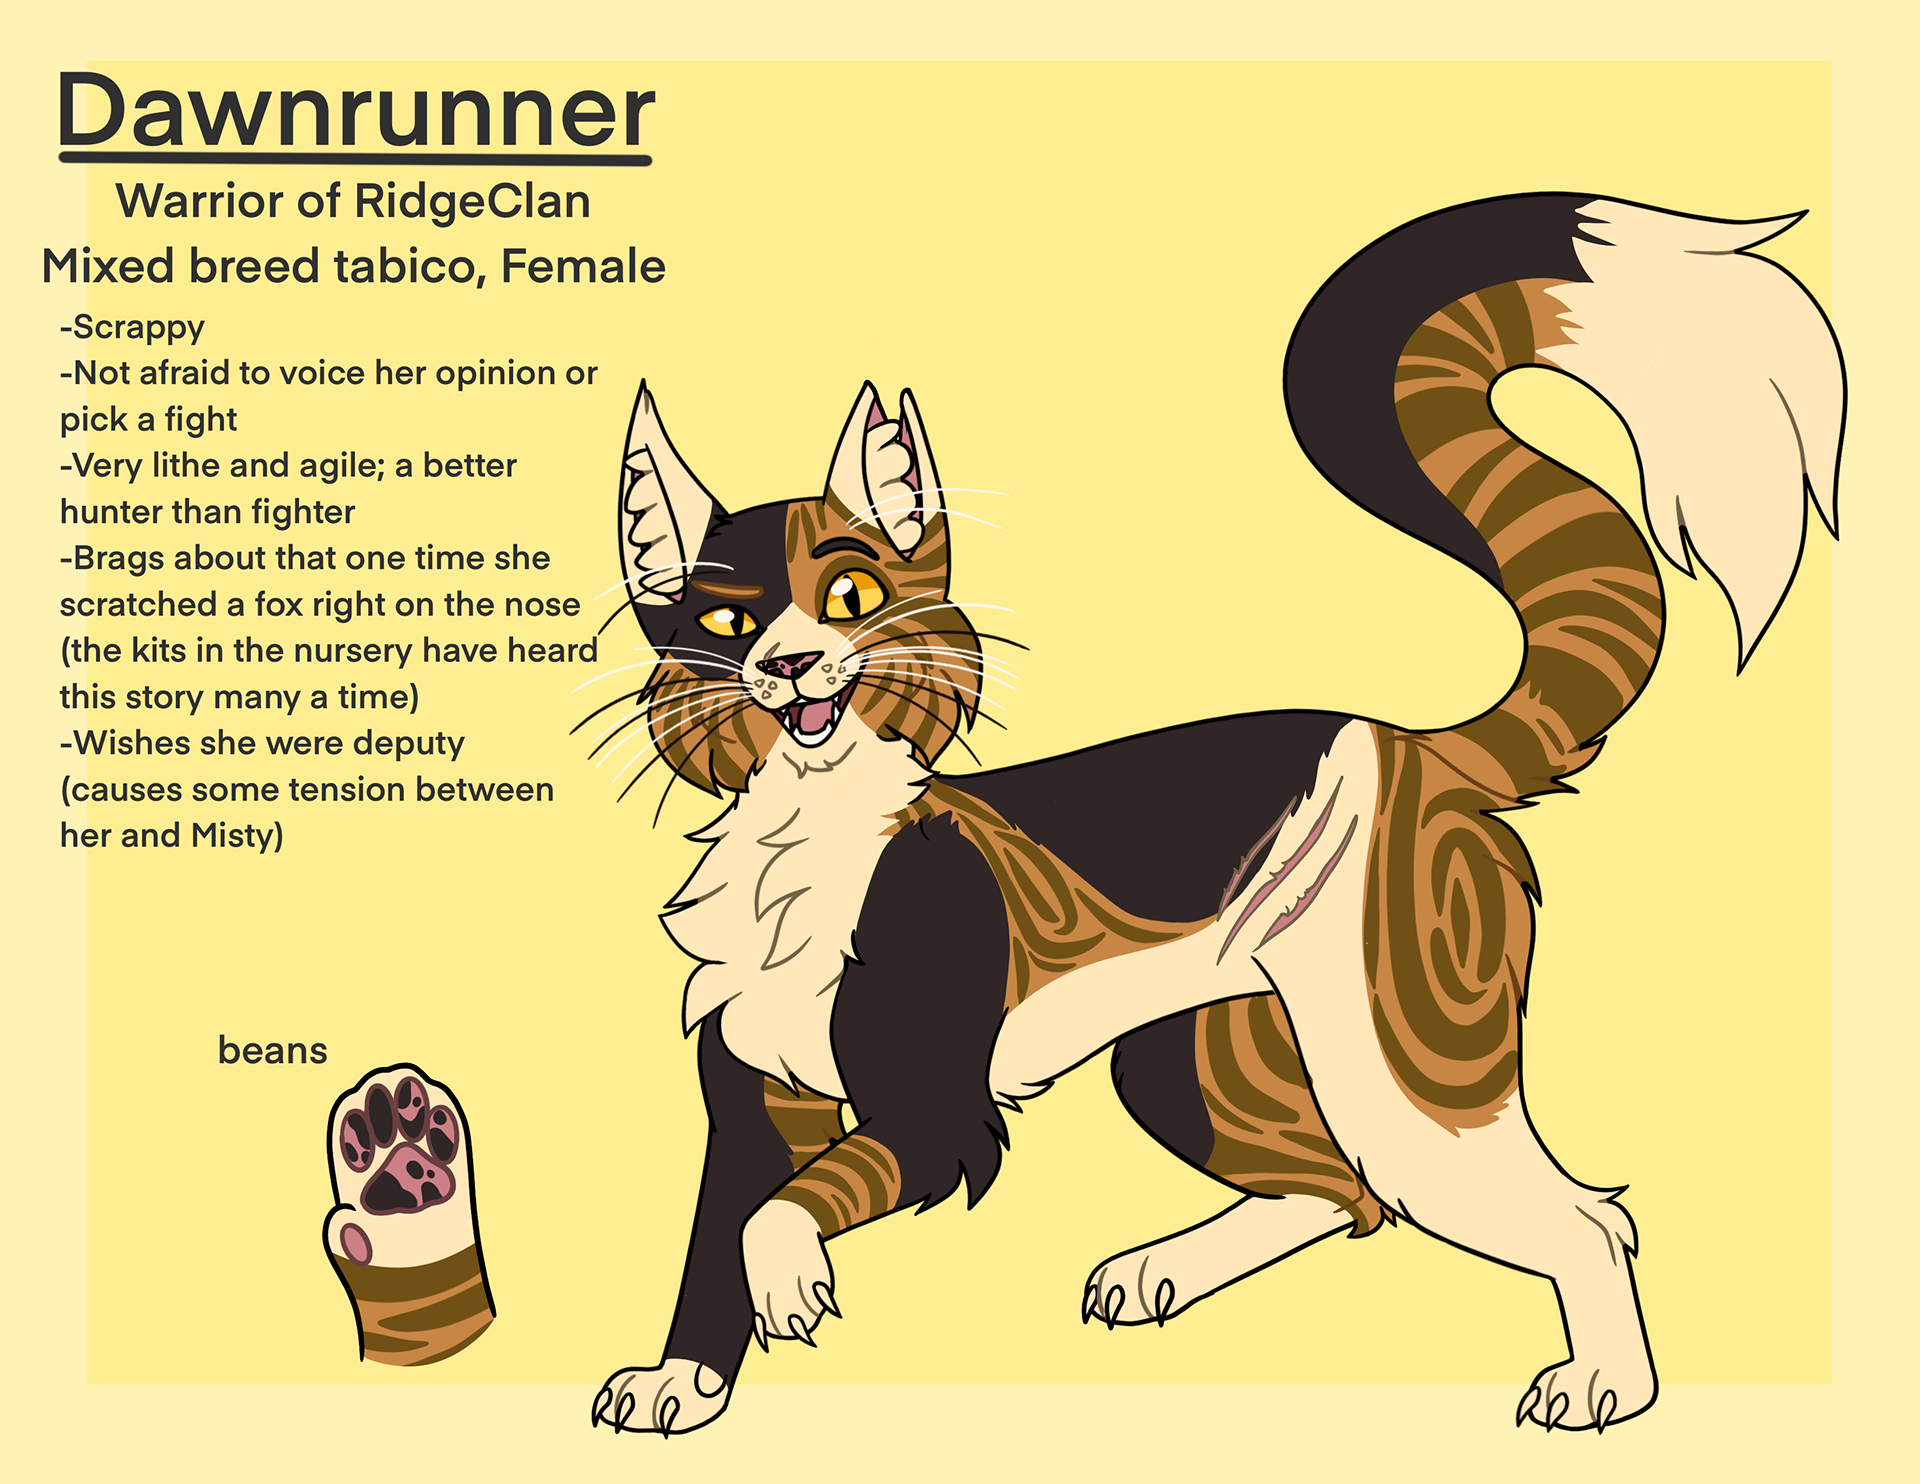 Character Designing: Warrior Cats Villains by RallyAllyArtist on DeviantArt